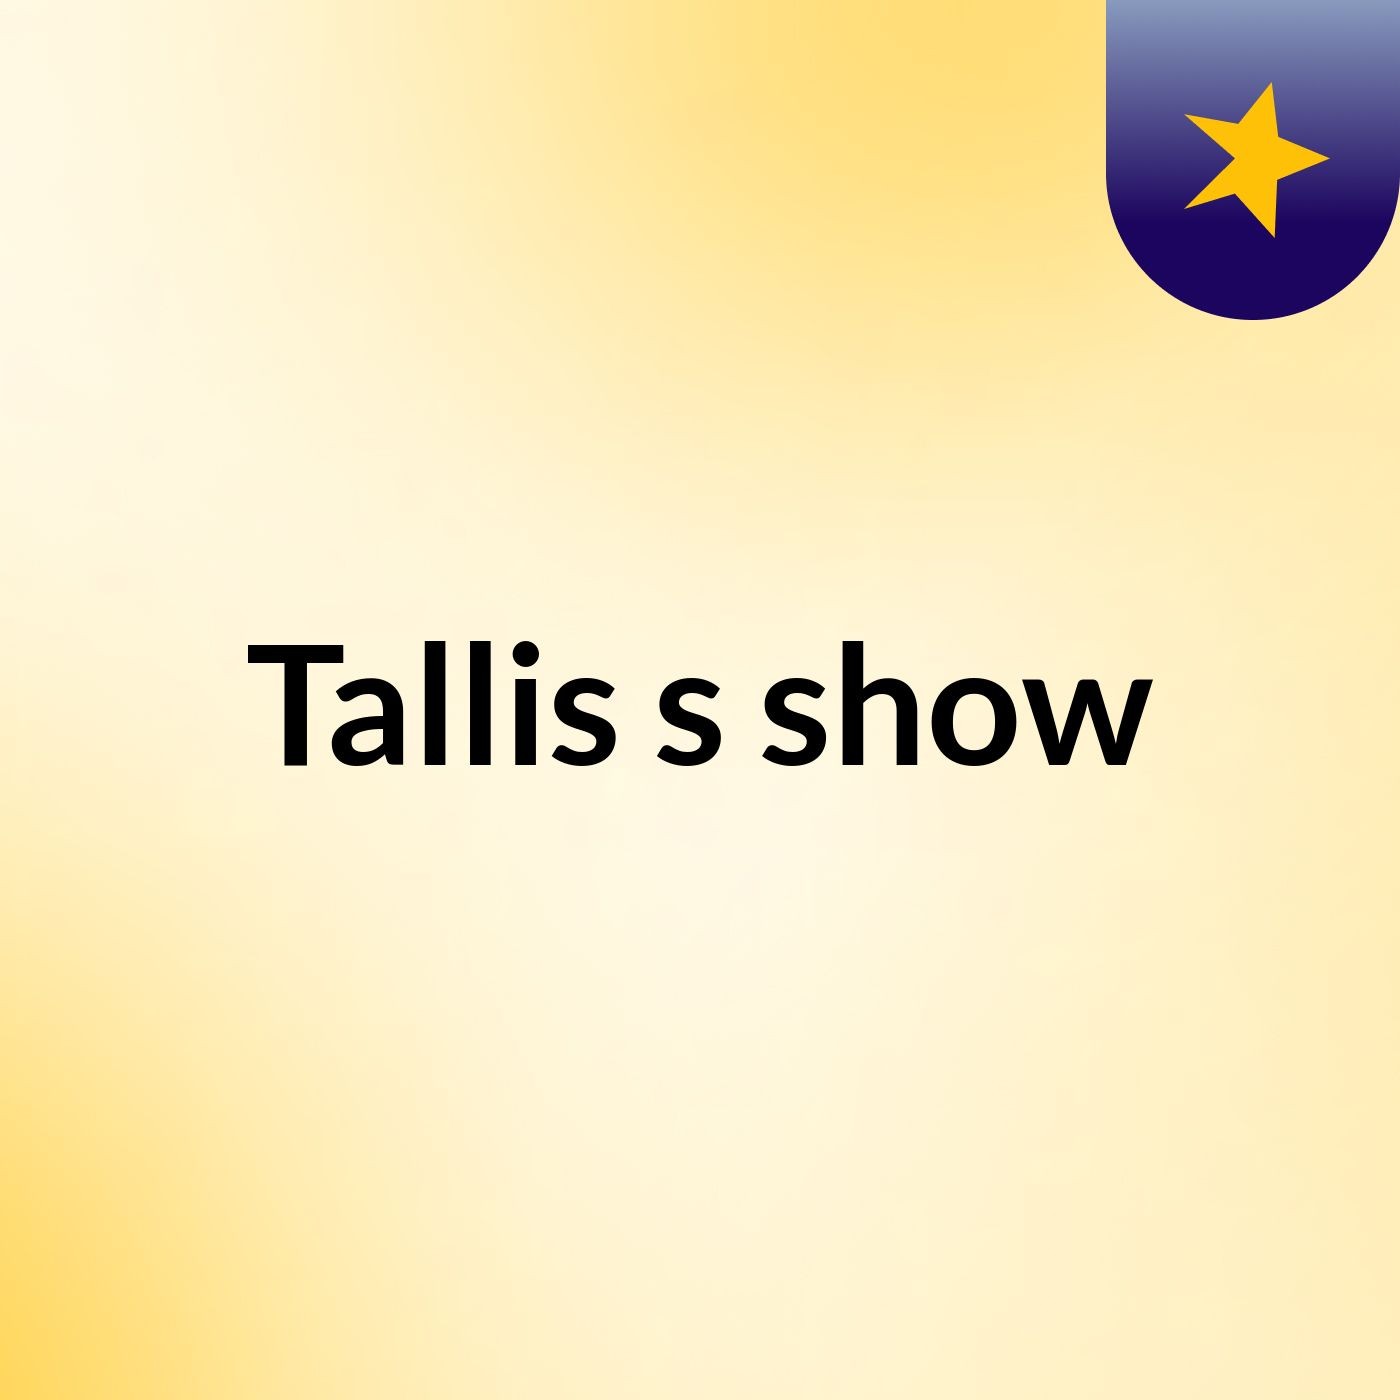 Tallis's show